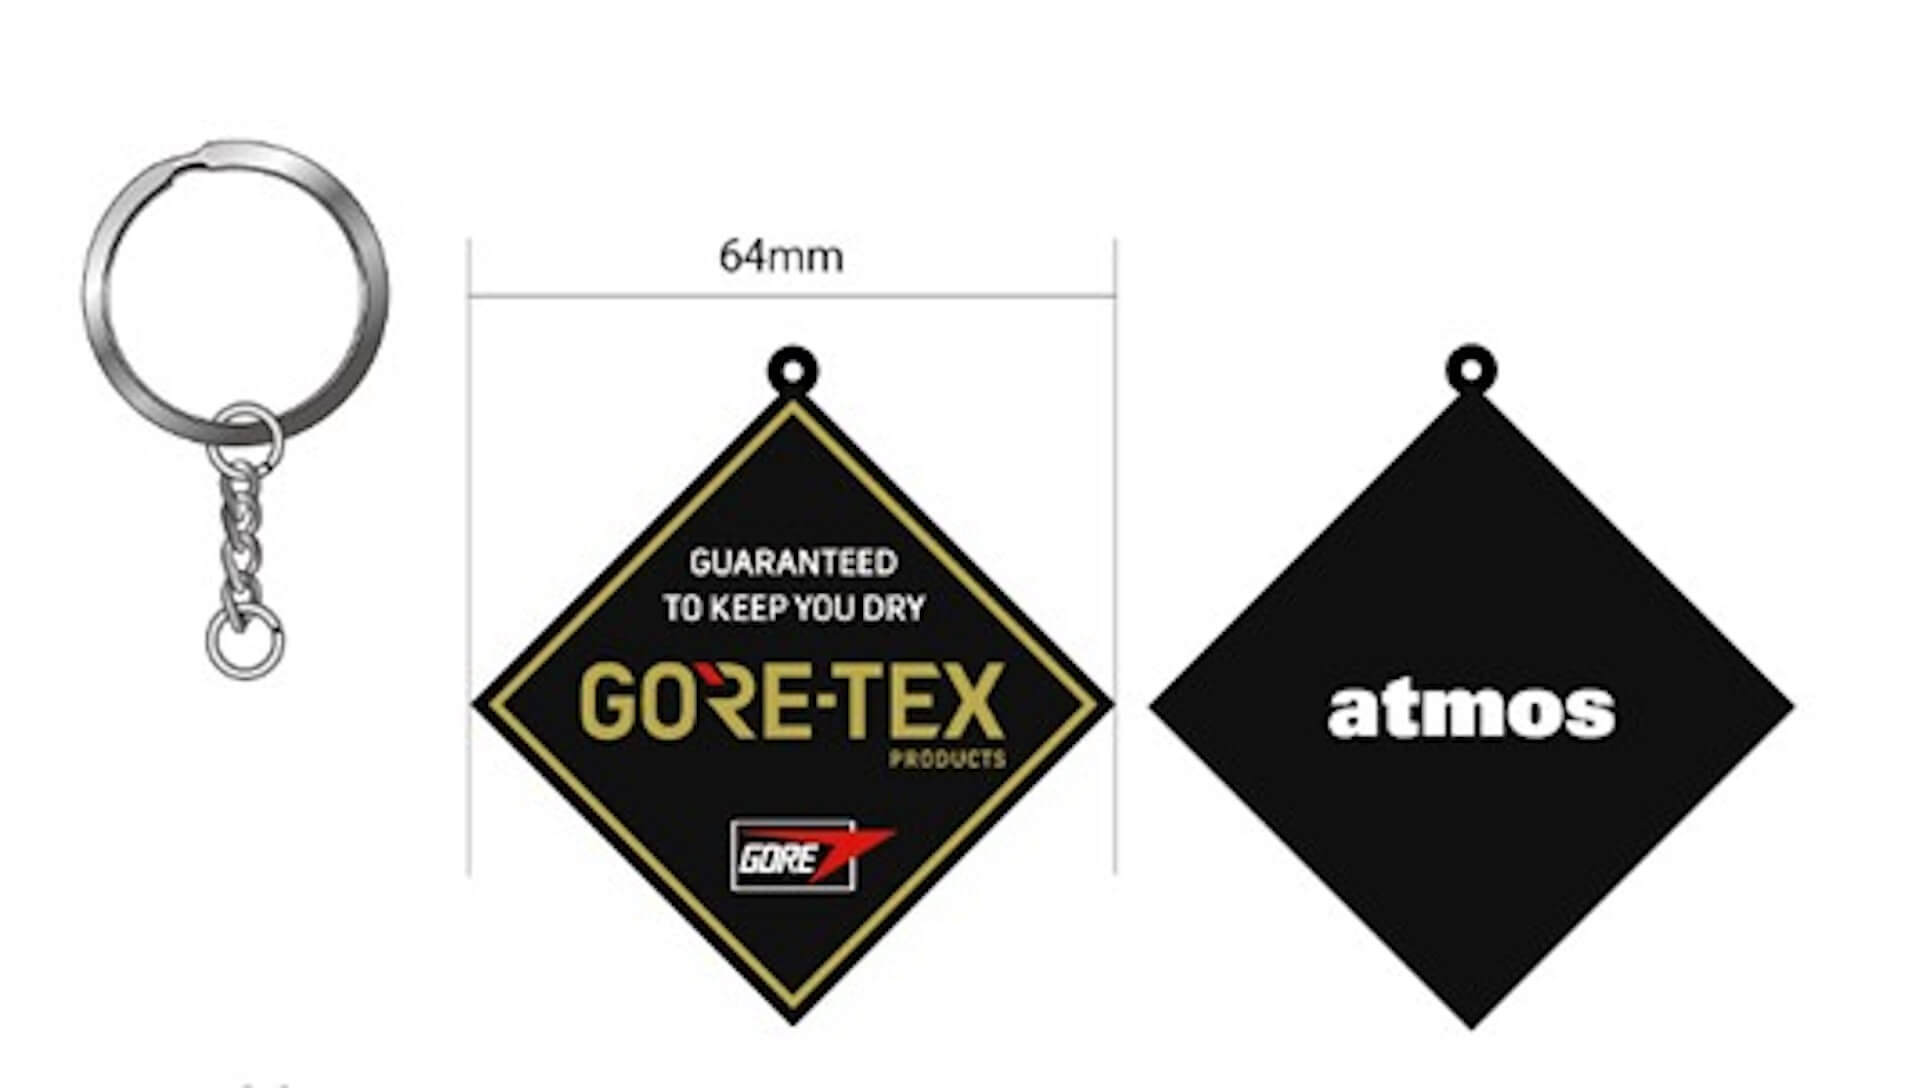 “GORE-TEXの防水性体験ができる！”「atmos」と「GORE-TEX BRAND」による期間限定POP UP開催決定 fashion221109-atmos-goretex-08